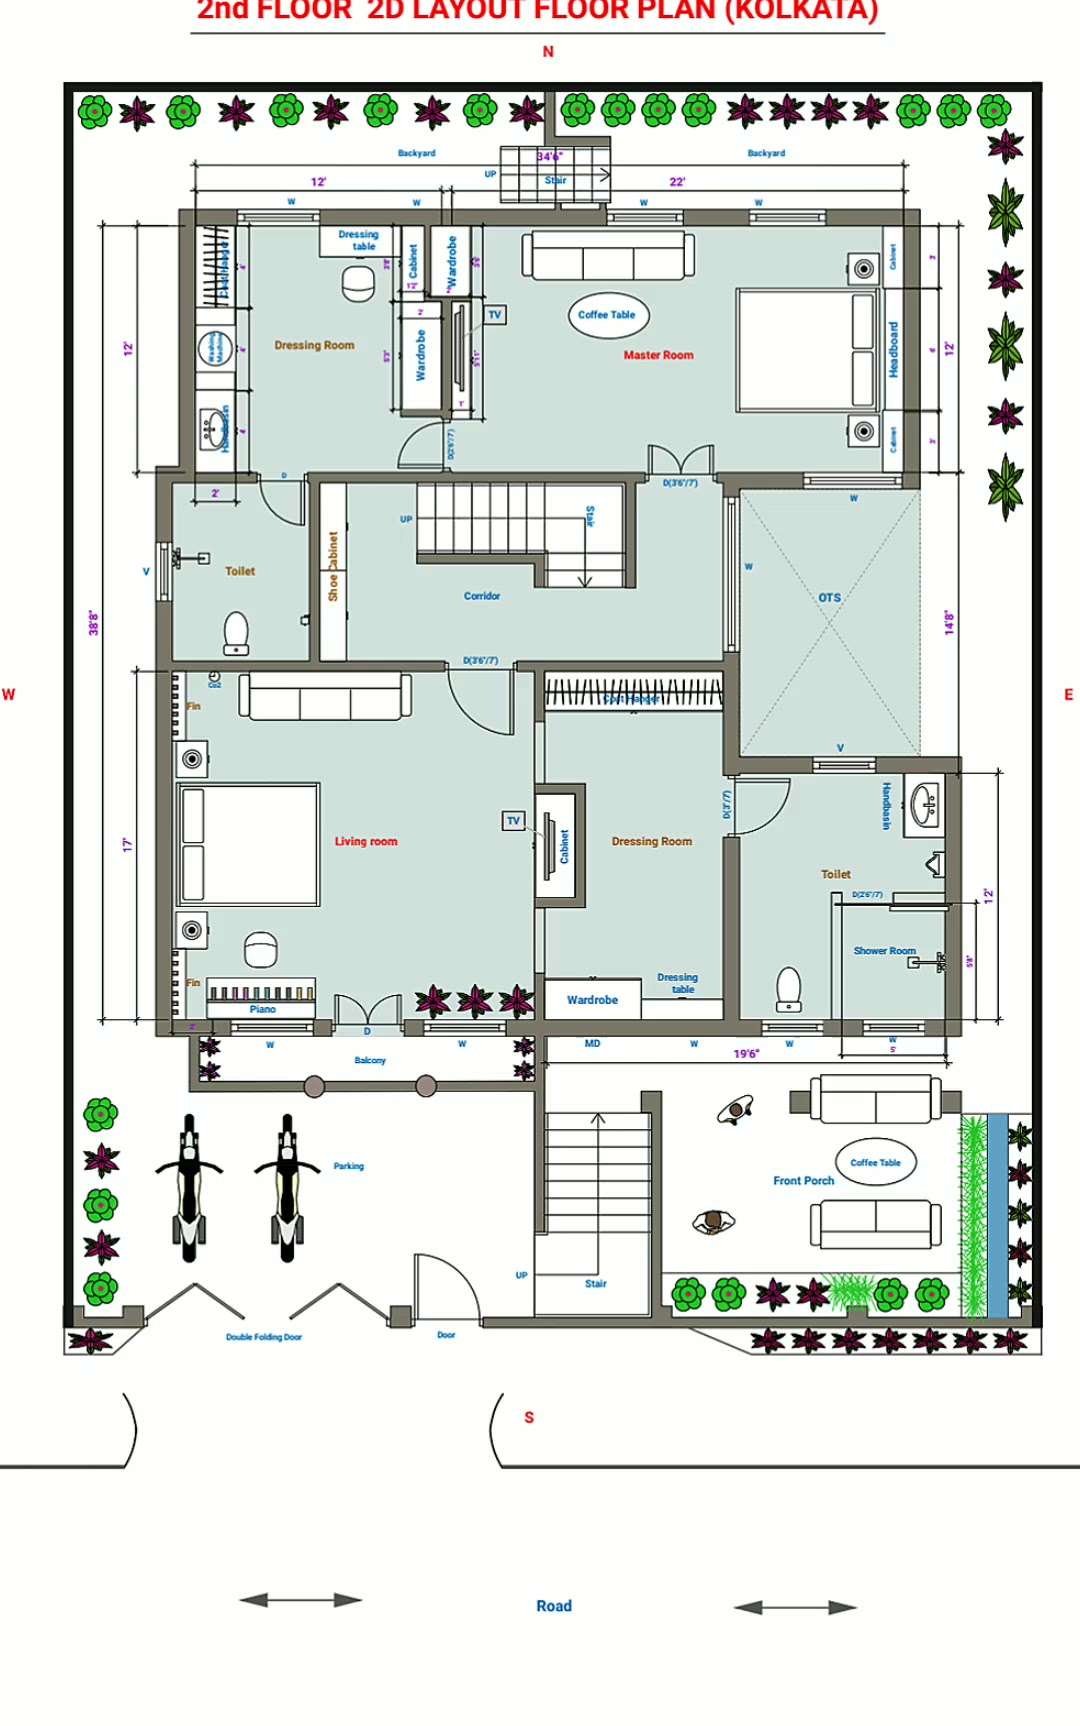 Duplex Floor Layout Plan 2D model